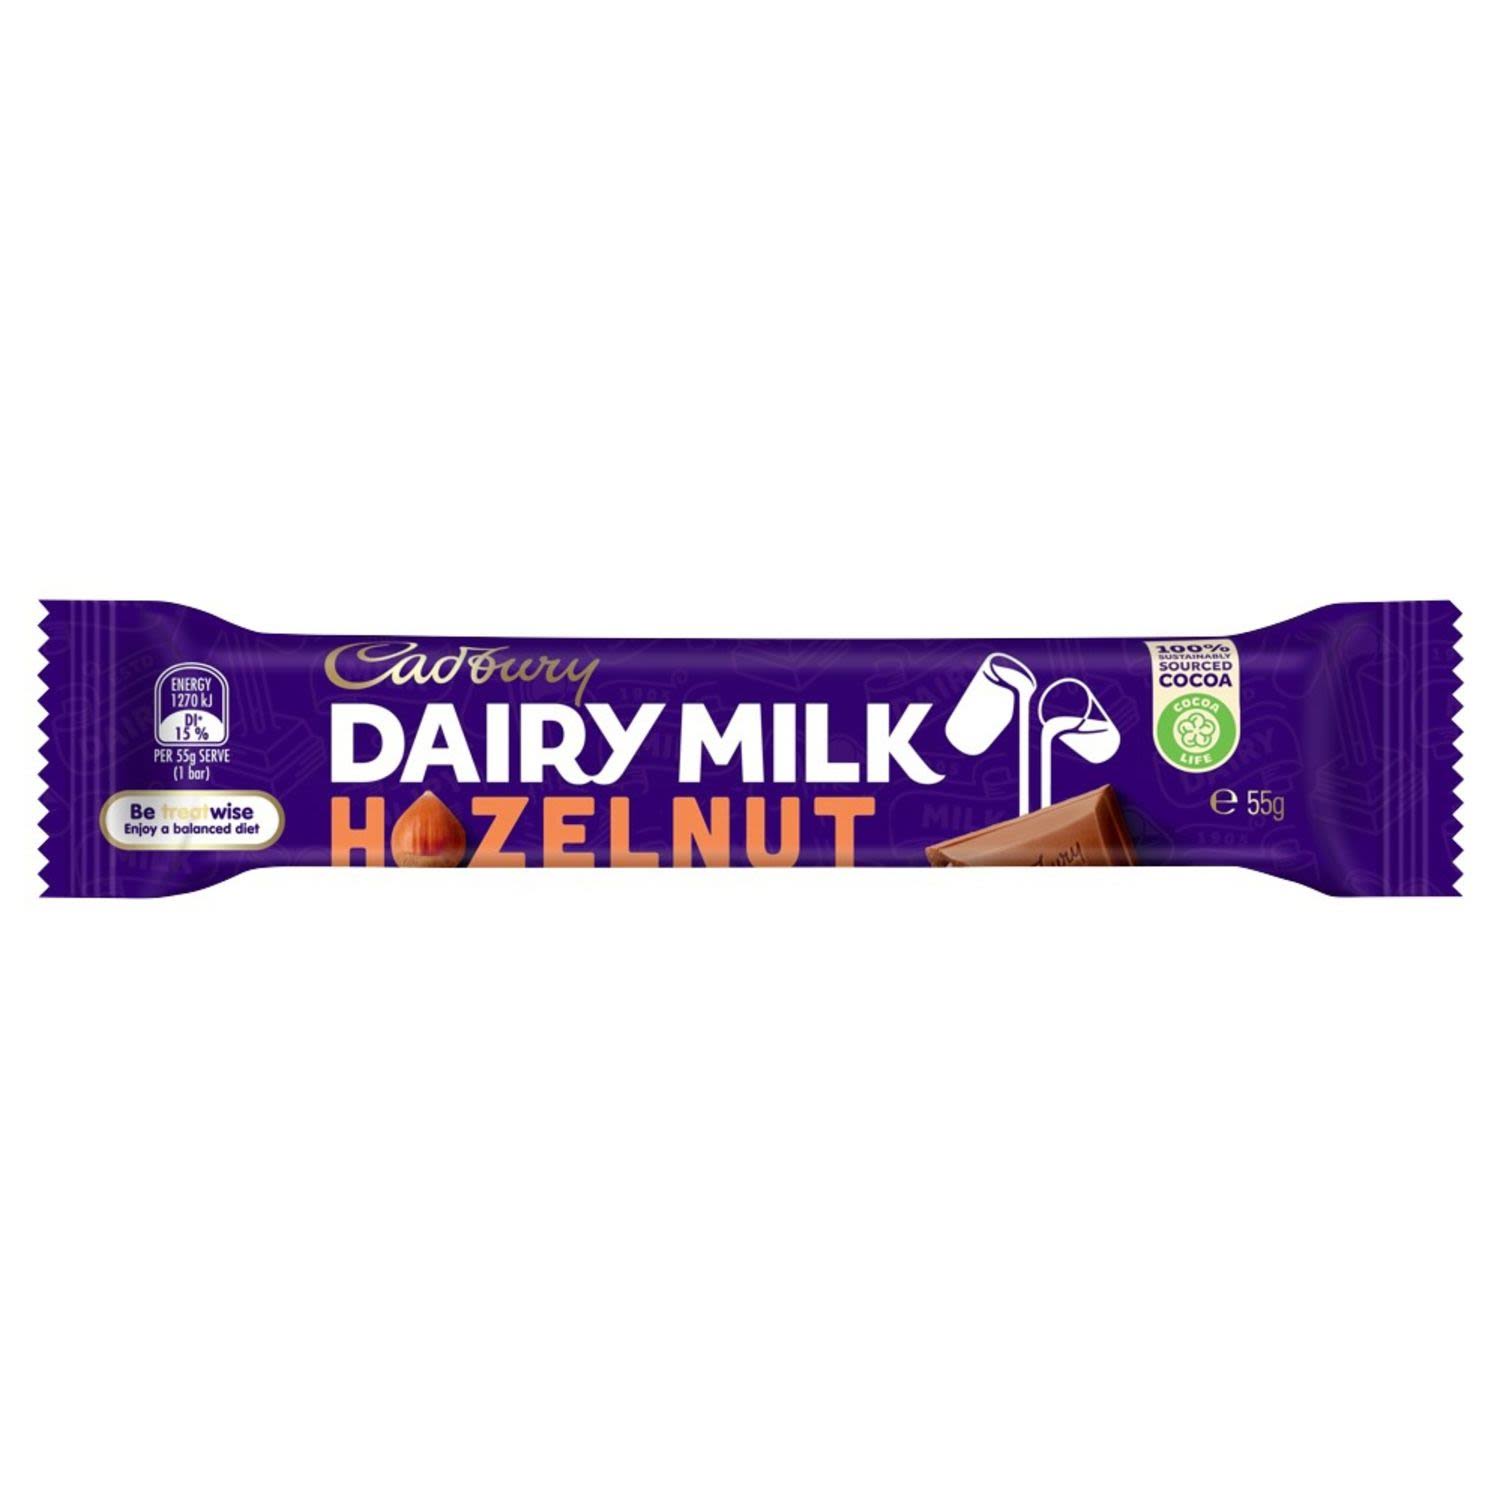 Cadbury Dairy Milk Chocolate Bar - Hazelnut, 55g